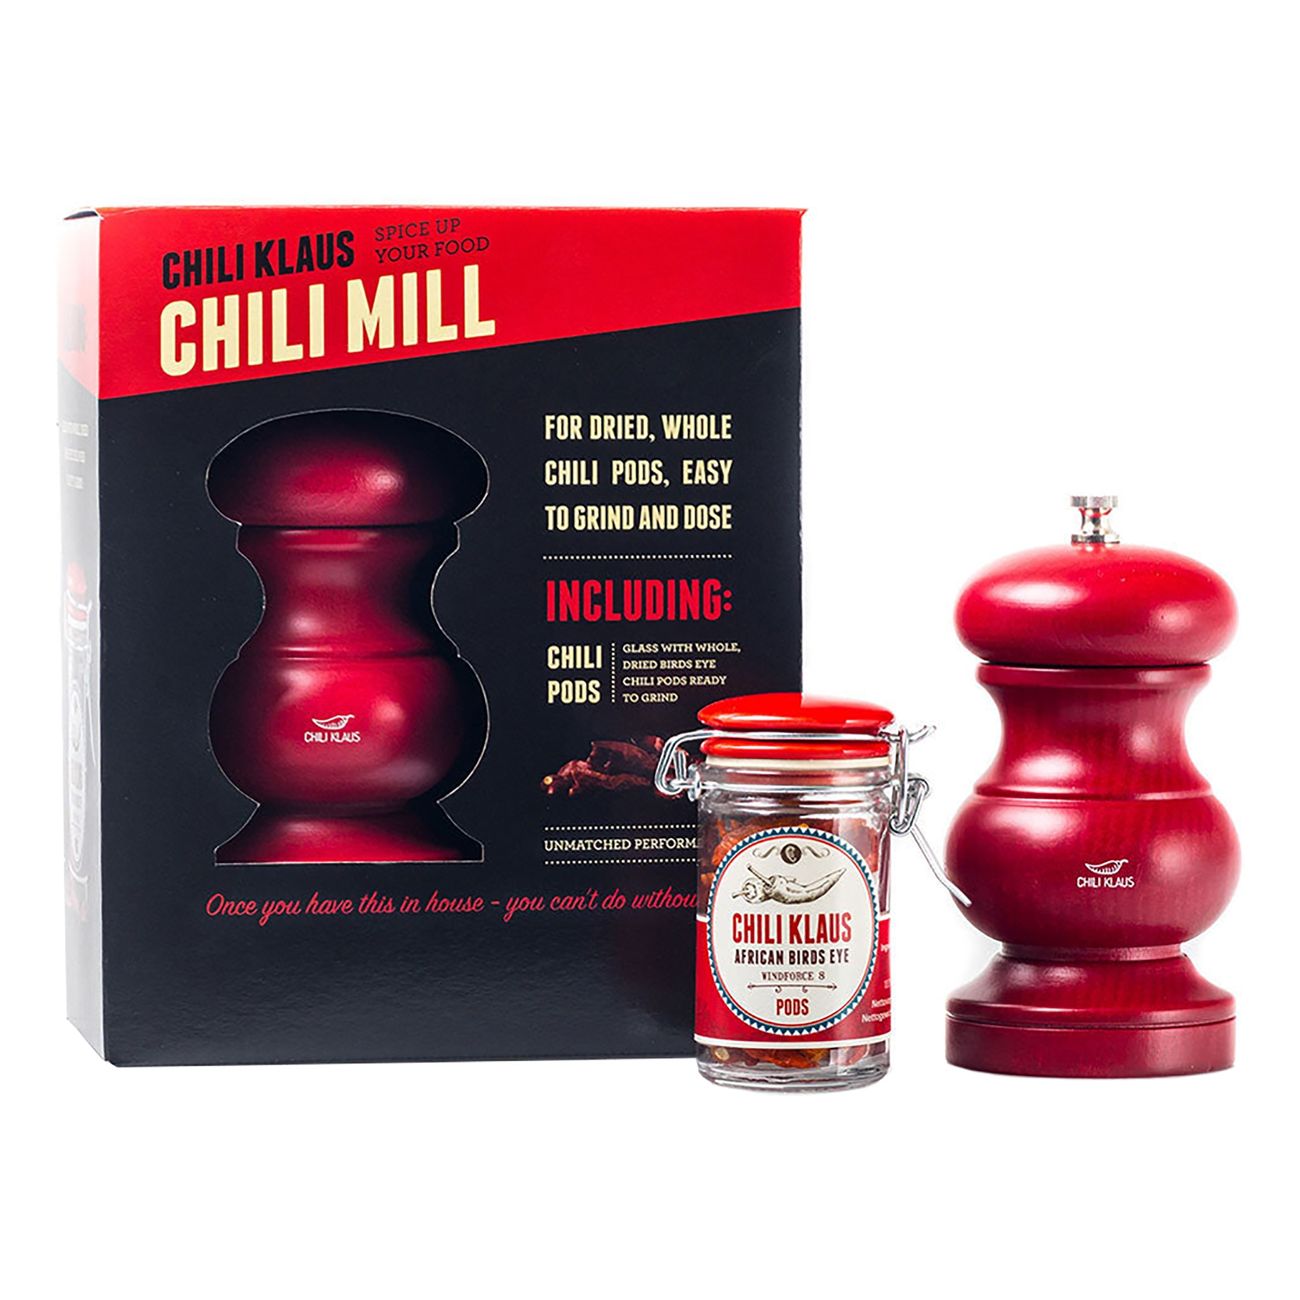 chili-mill-giftbox-med-birds-eye-pods-92926-1